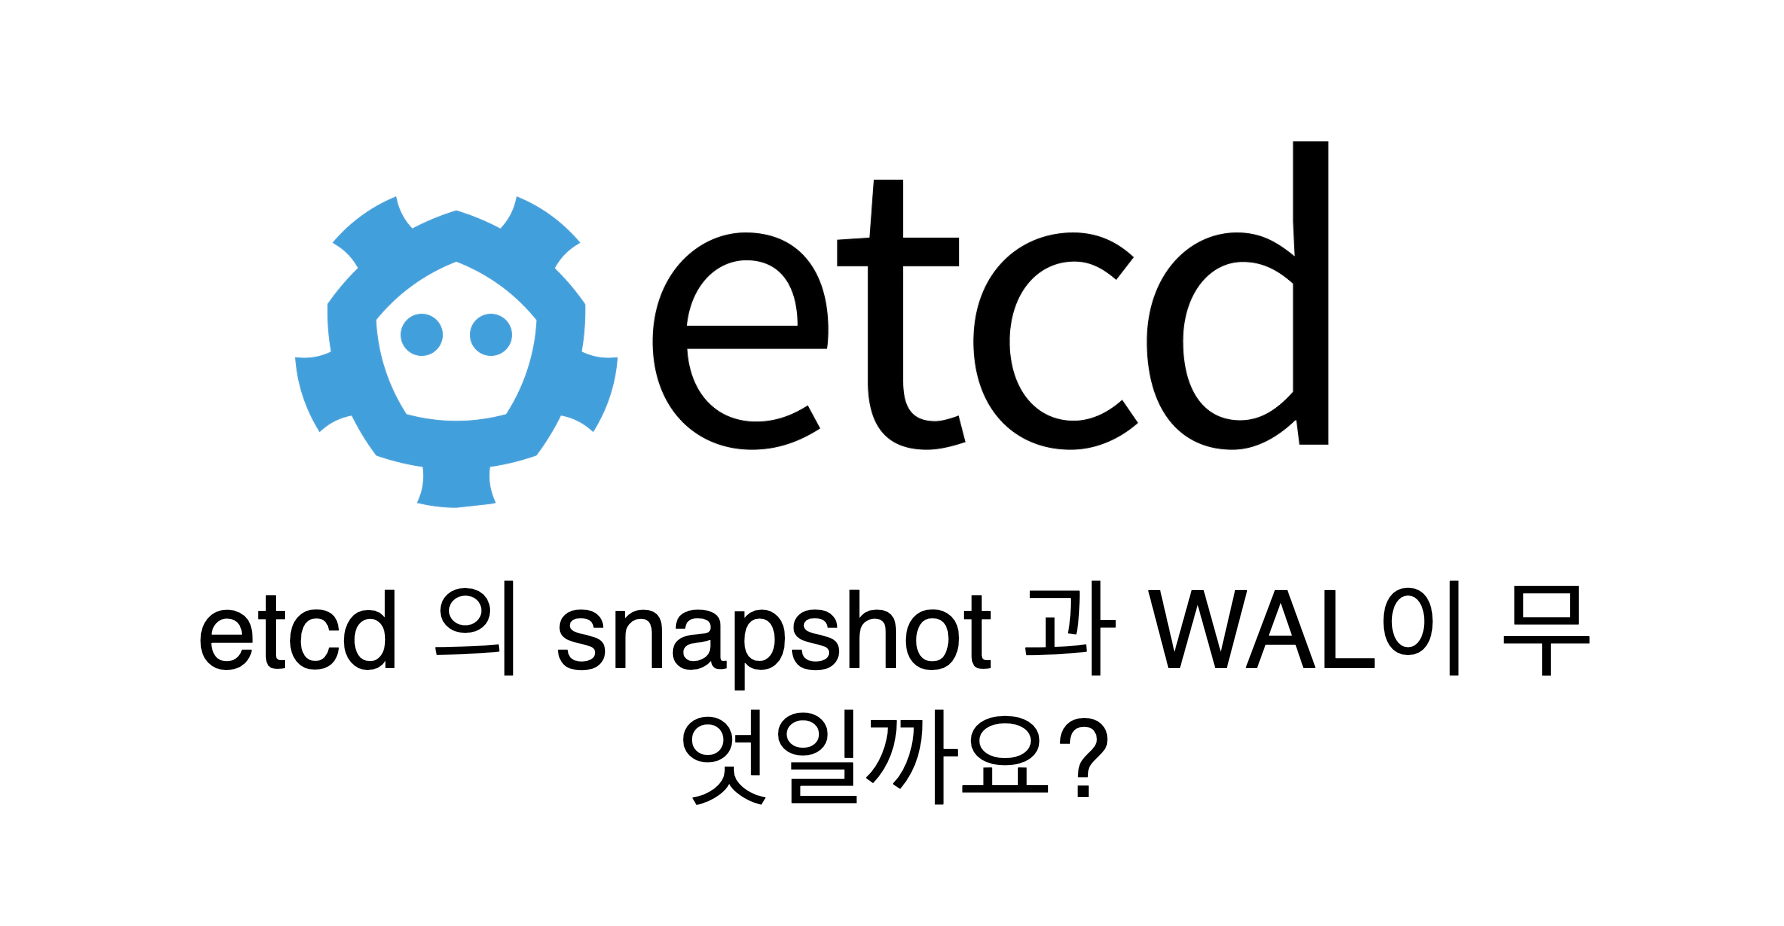 etcd 의 snapshot 과 WAL이 무엇일까요? (etcd backup snapshot이 아닌)